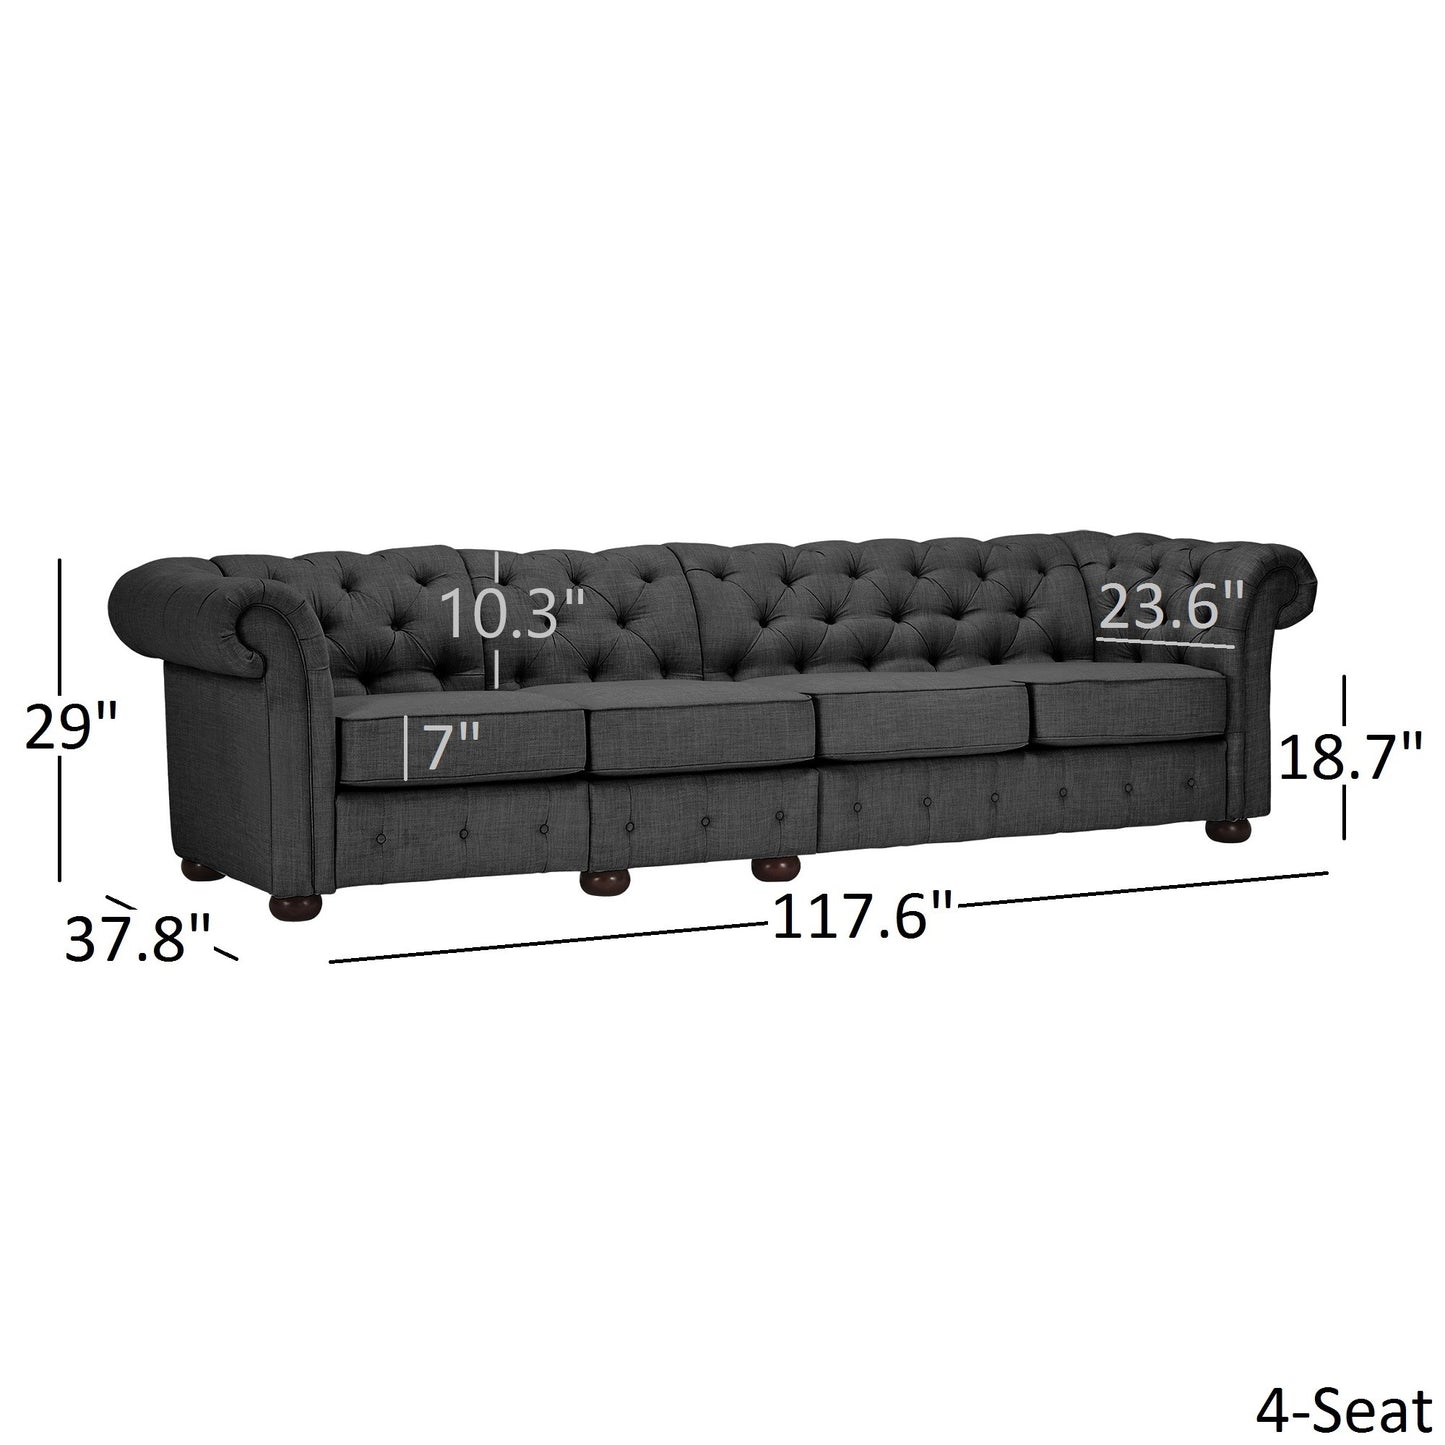 4-Seat Modular Chesterfield Sofa - Dark Grey Linen